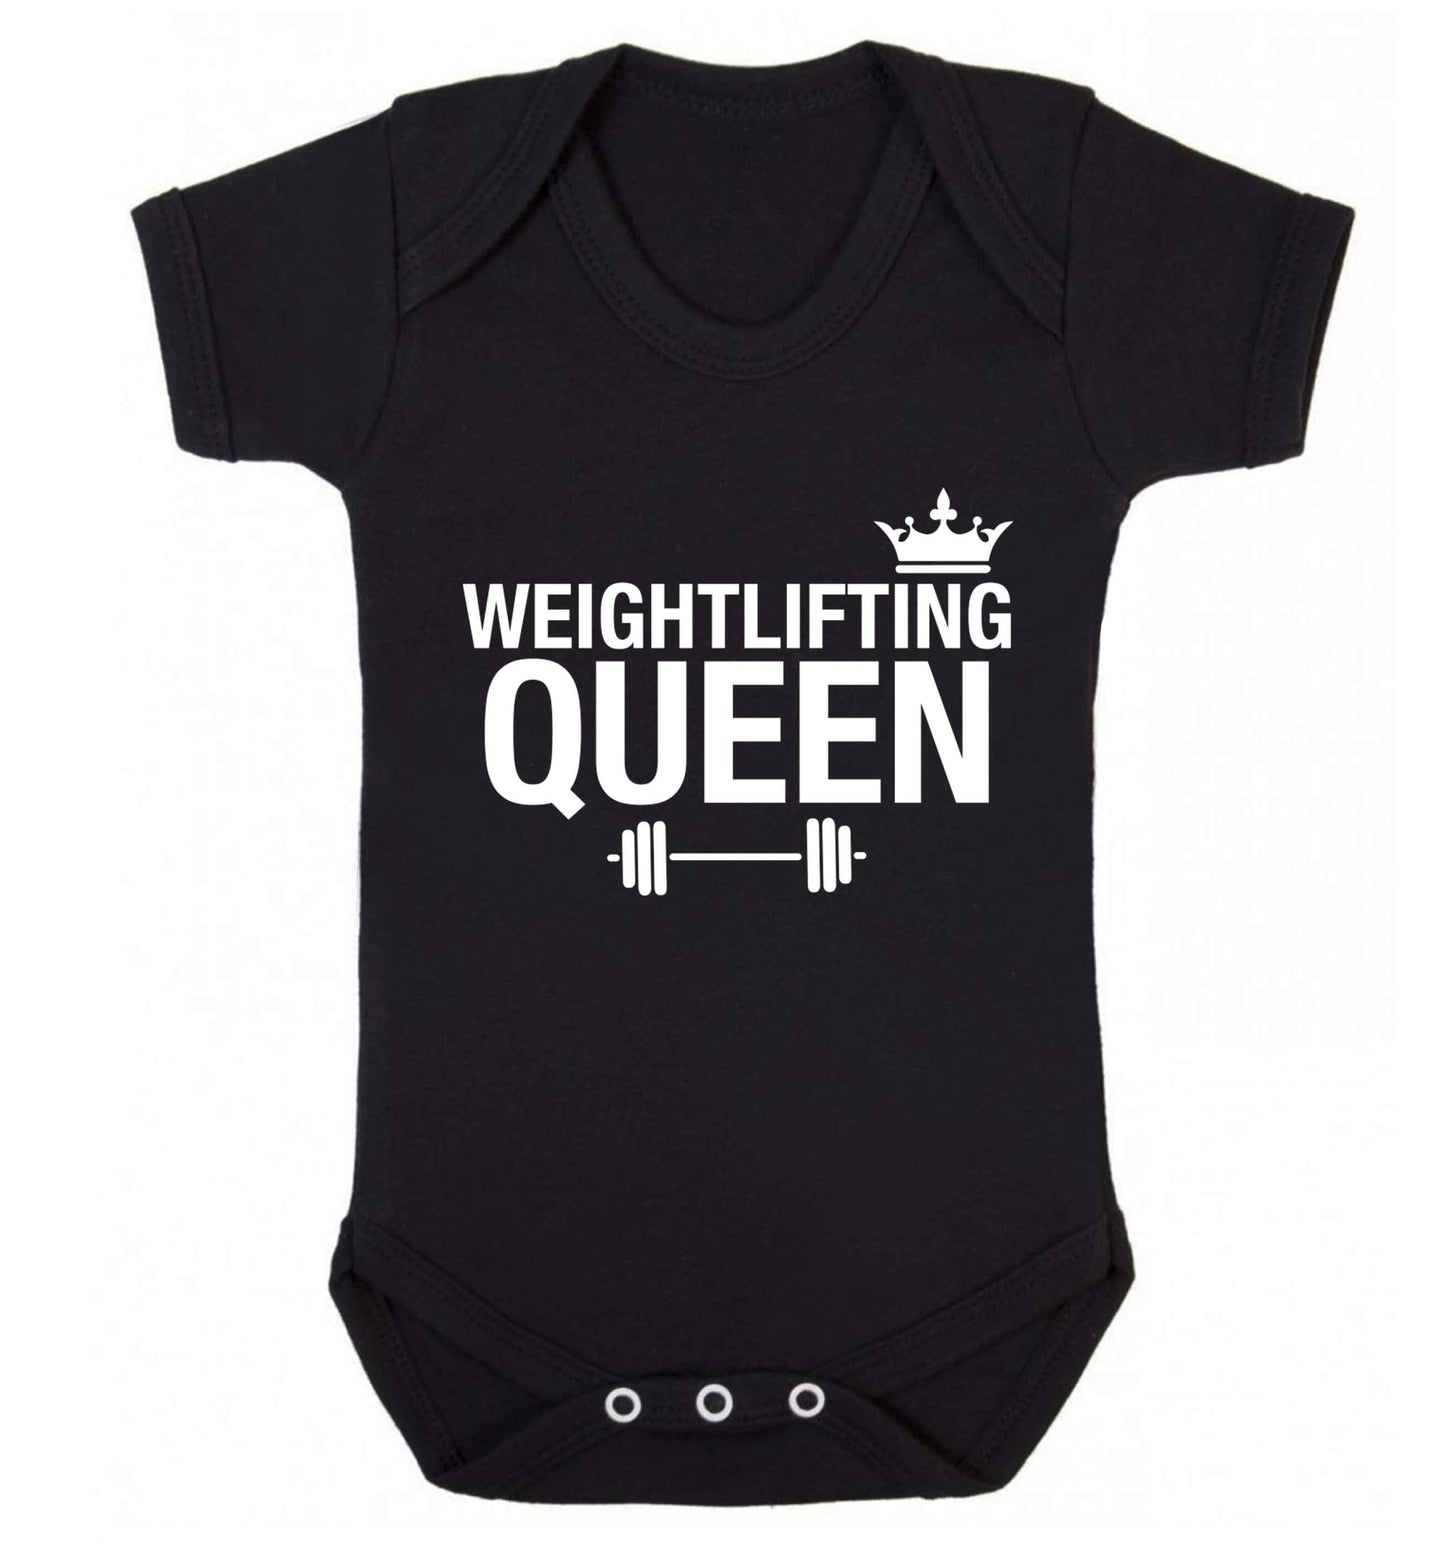 Weightlifting Queen Baby Vest black 18-24 months